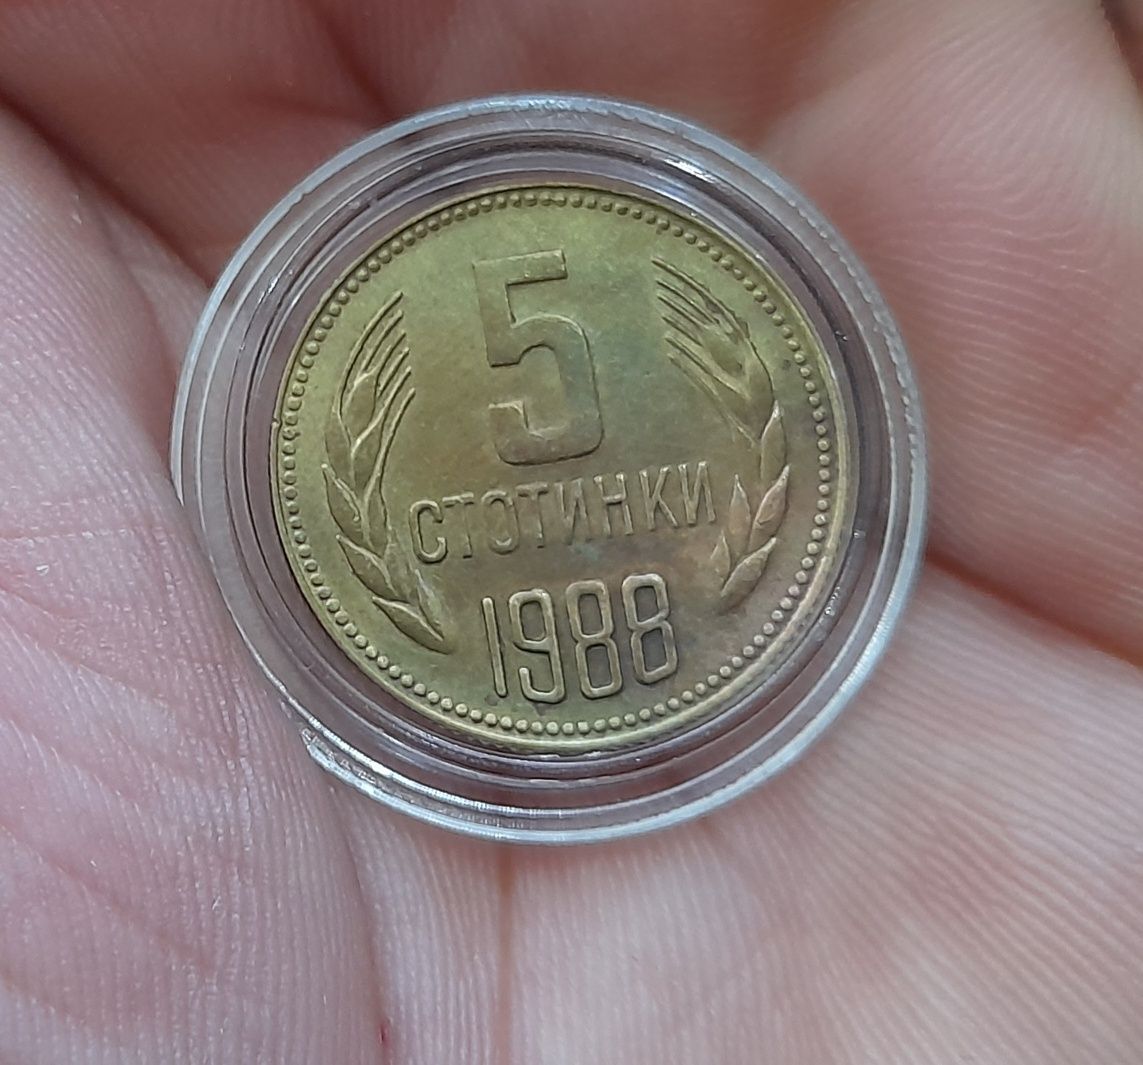 5 стотинки 1988 година - редка